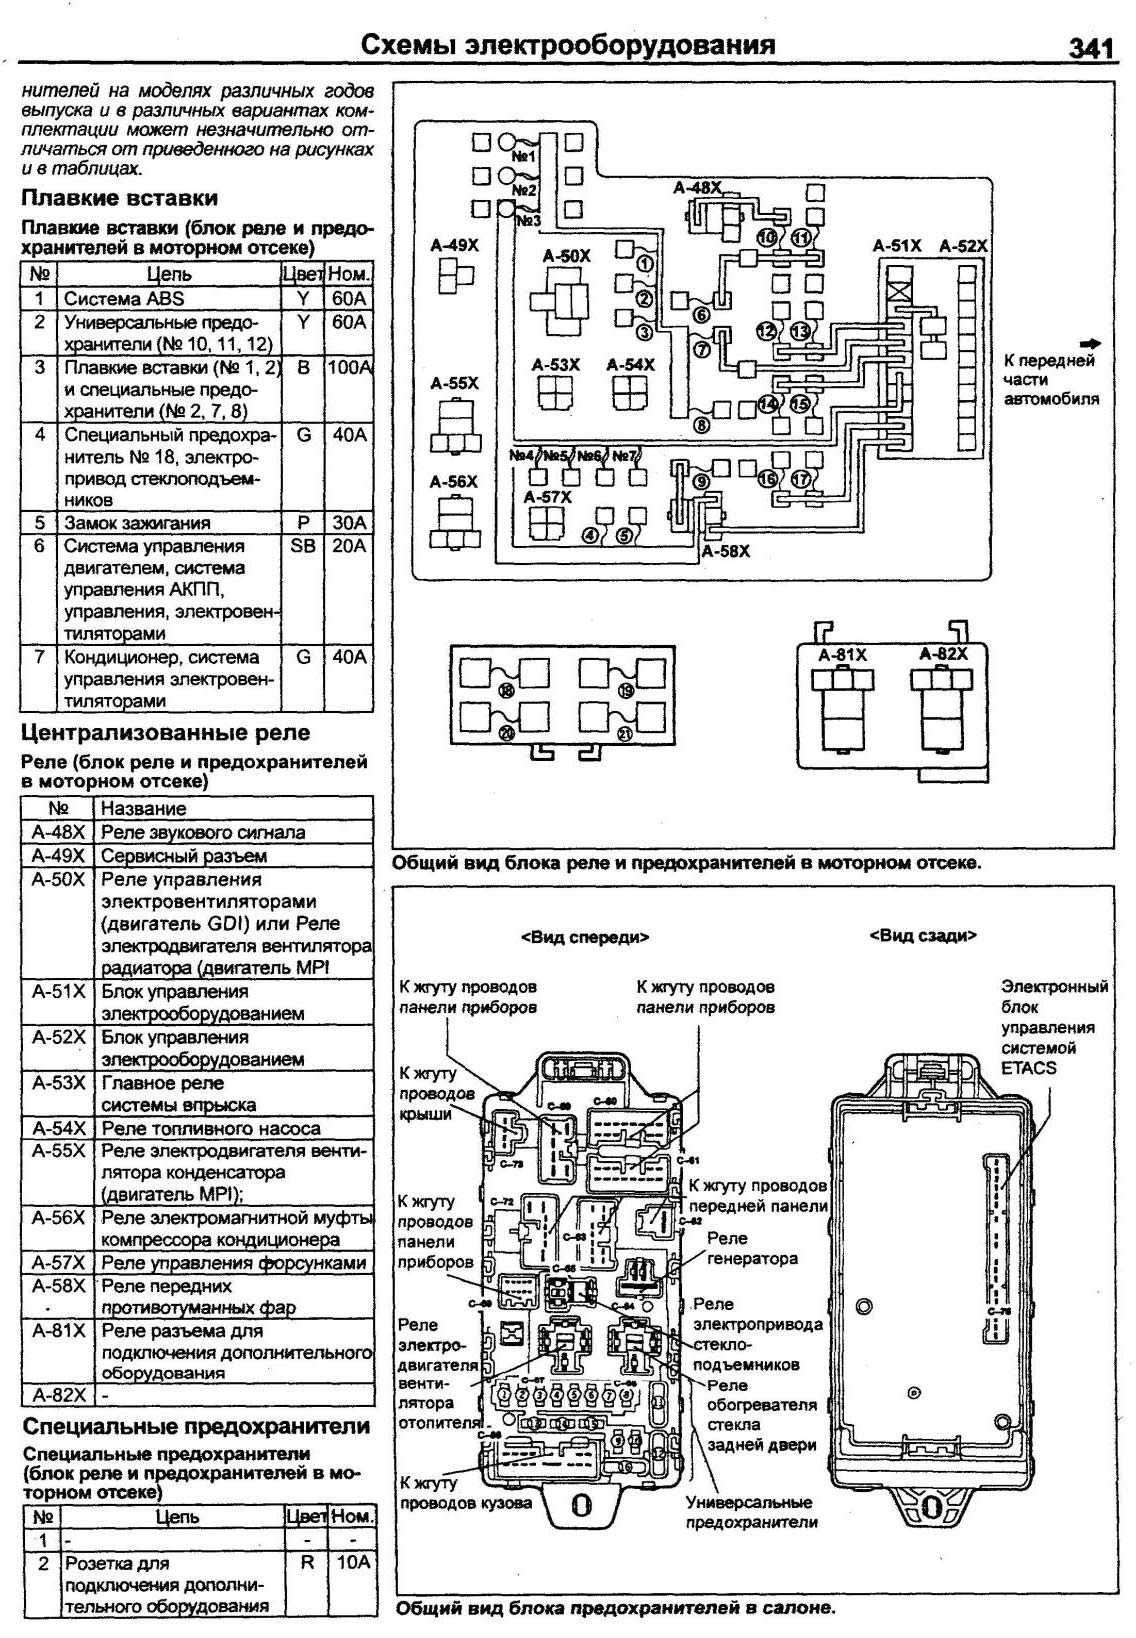 Описание предохранителей и реле mitsubishi galant 9 со схемами блоков